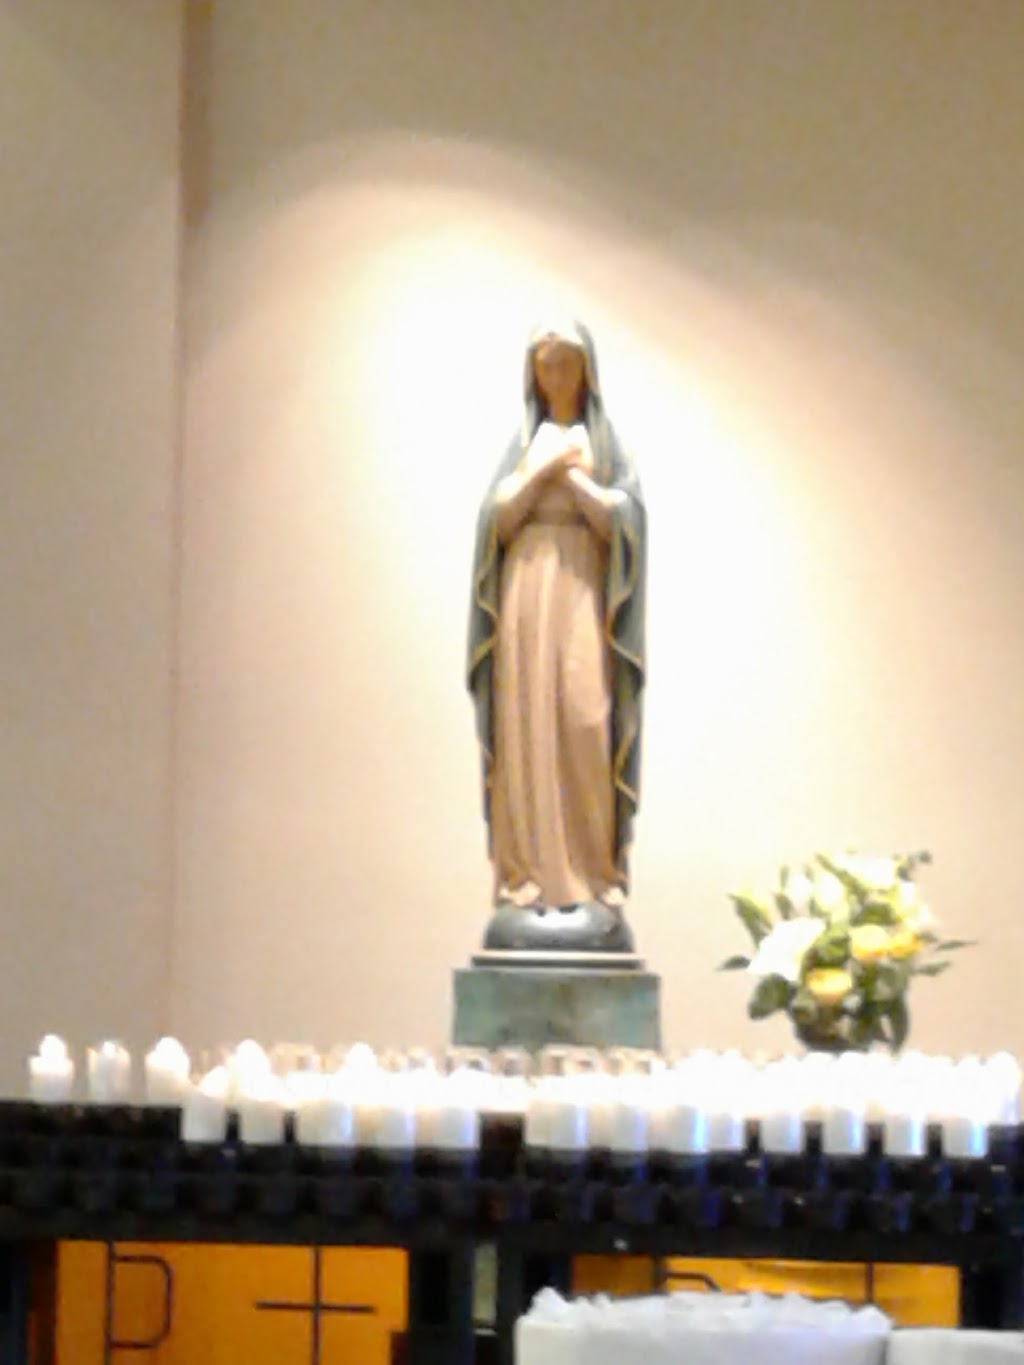 St Raphael Korean Catholic Center | 12366 Rosecrans Ave, Norwalk, CA 90650, USA | Phone: (562) 623-0700